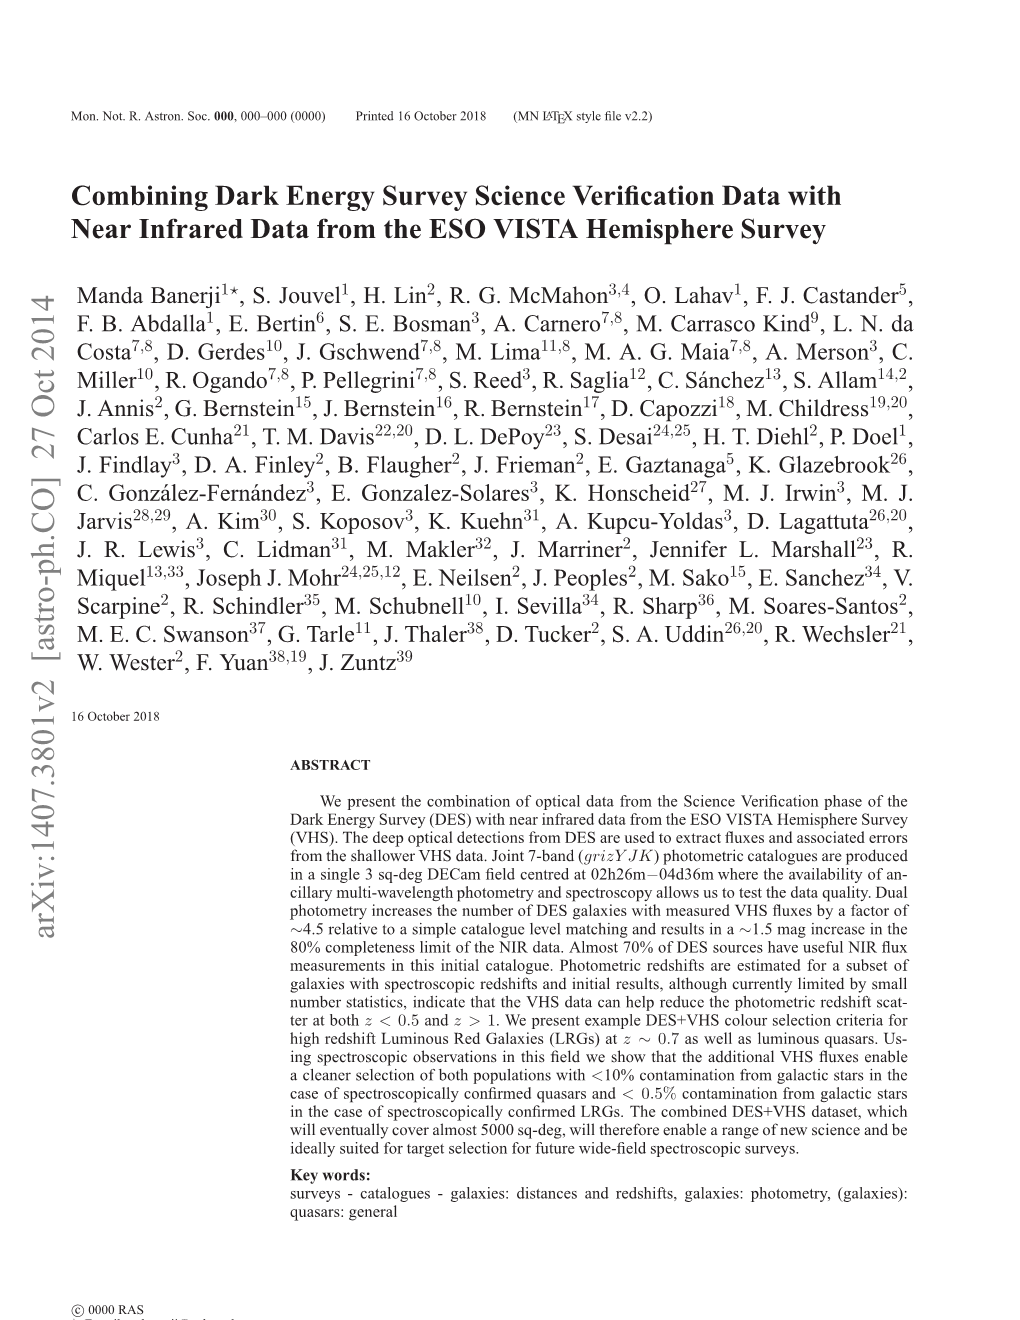 Combining Dark Energy Survey Science Verification Data with Near